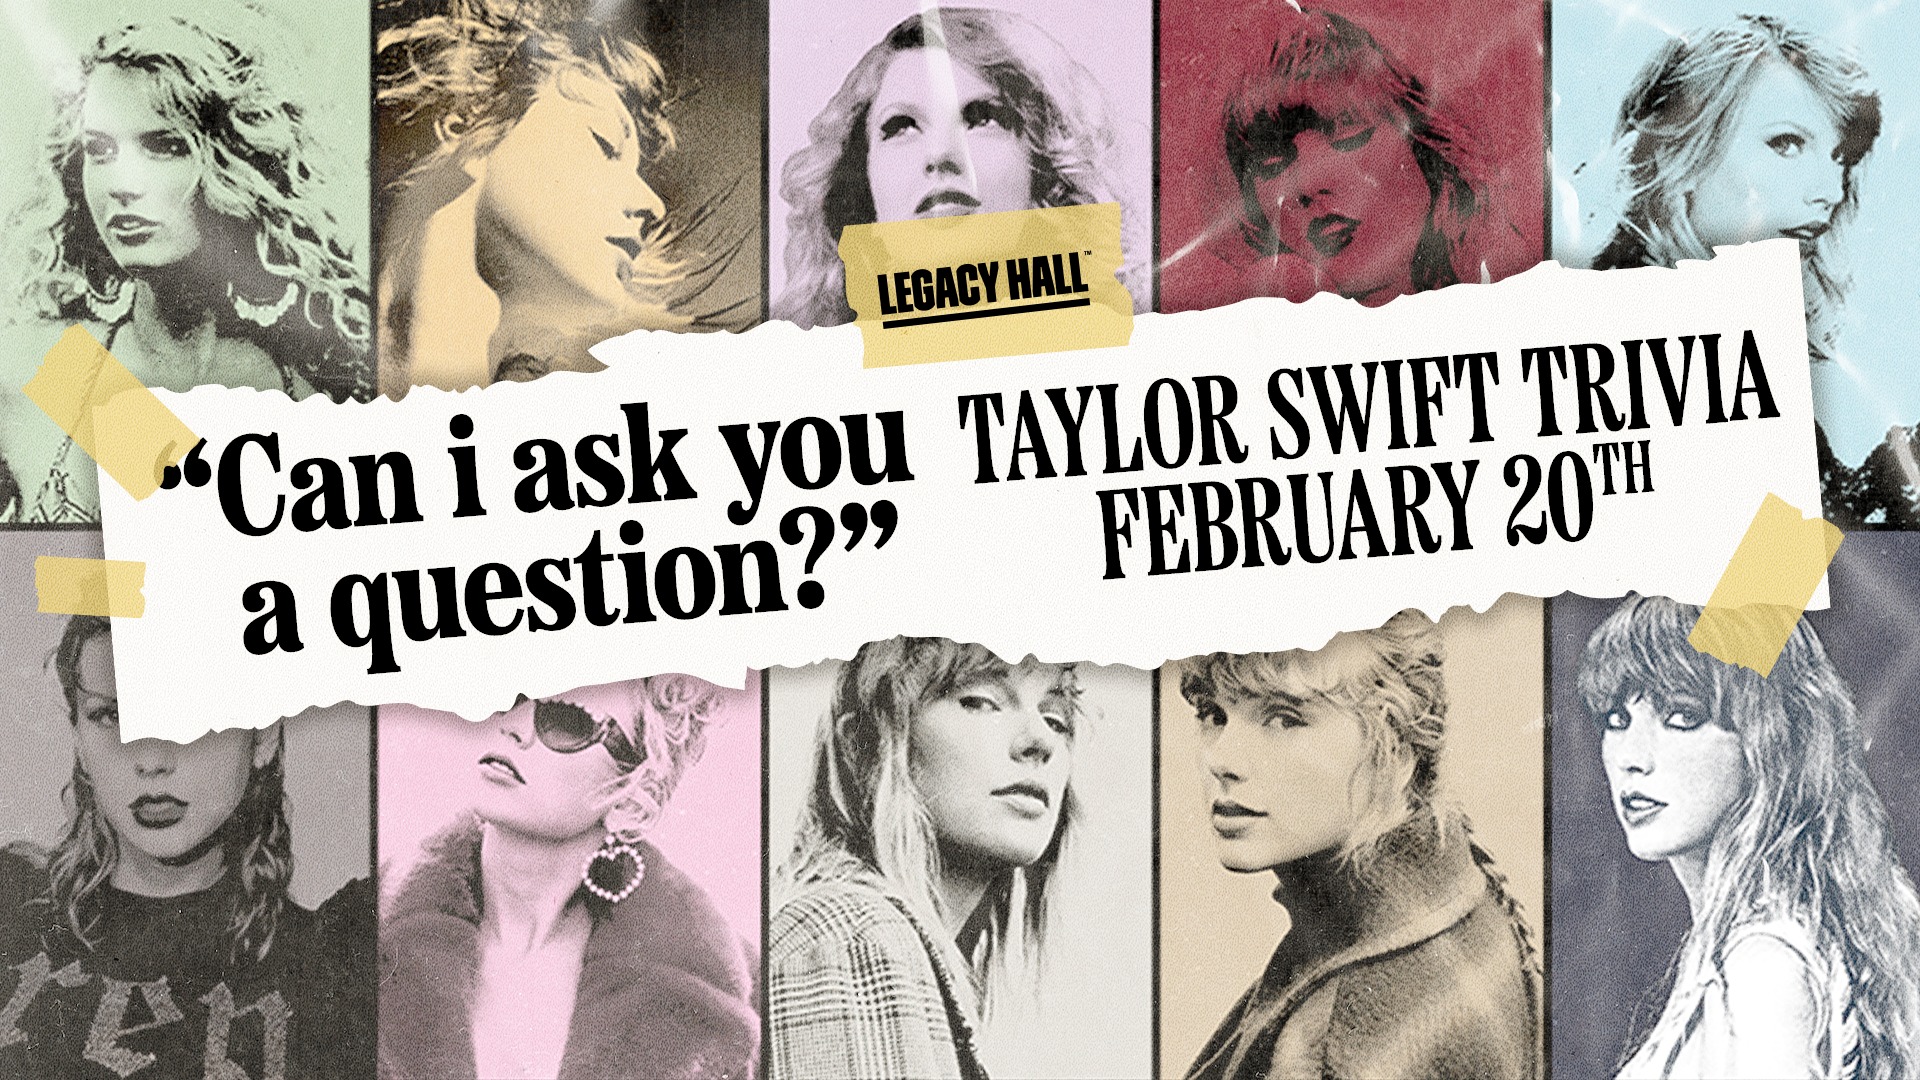 Taylor Swift Trivia at Legacy Hall